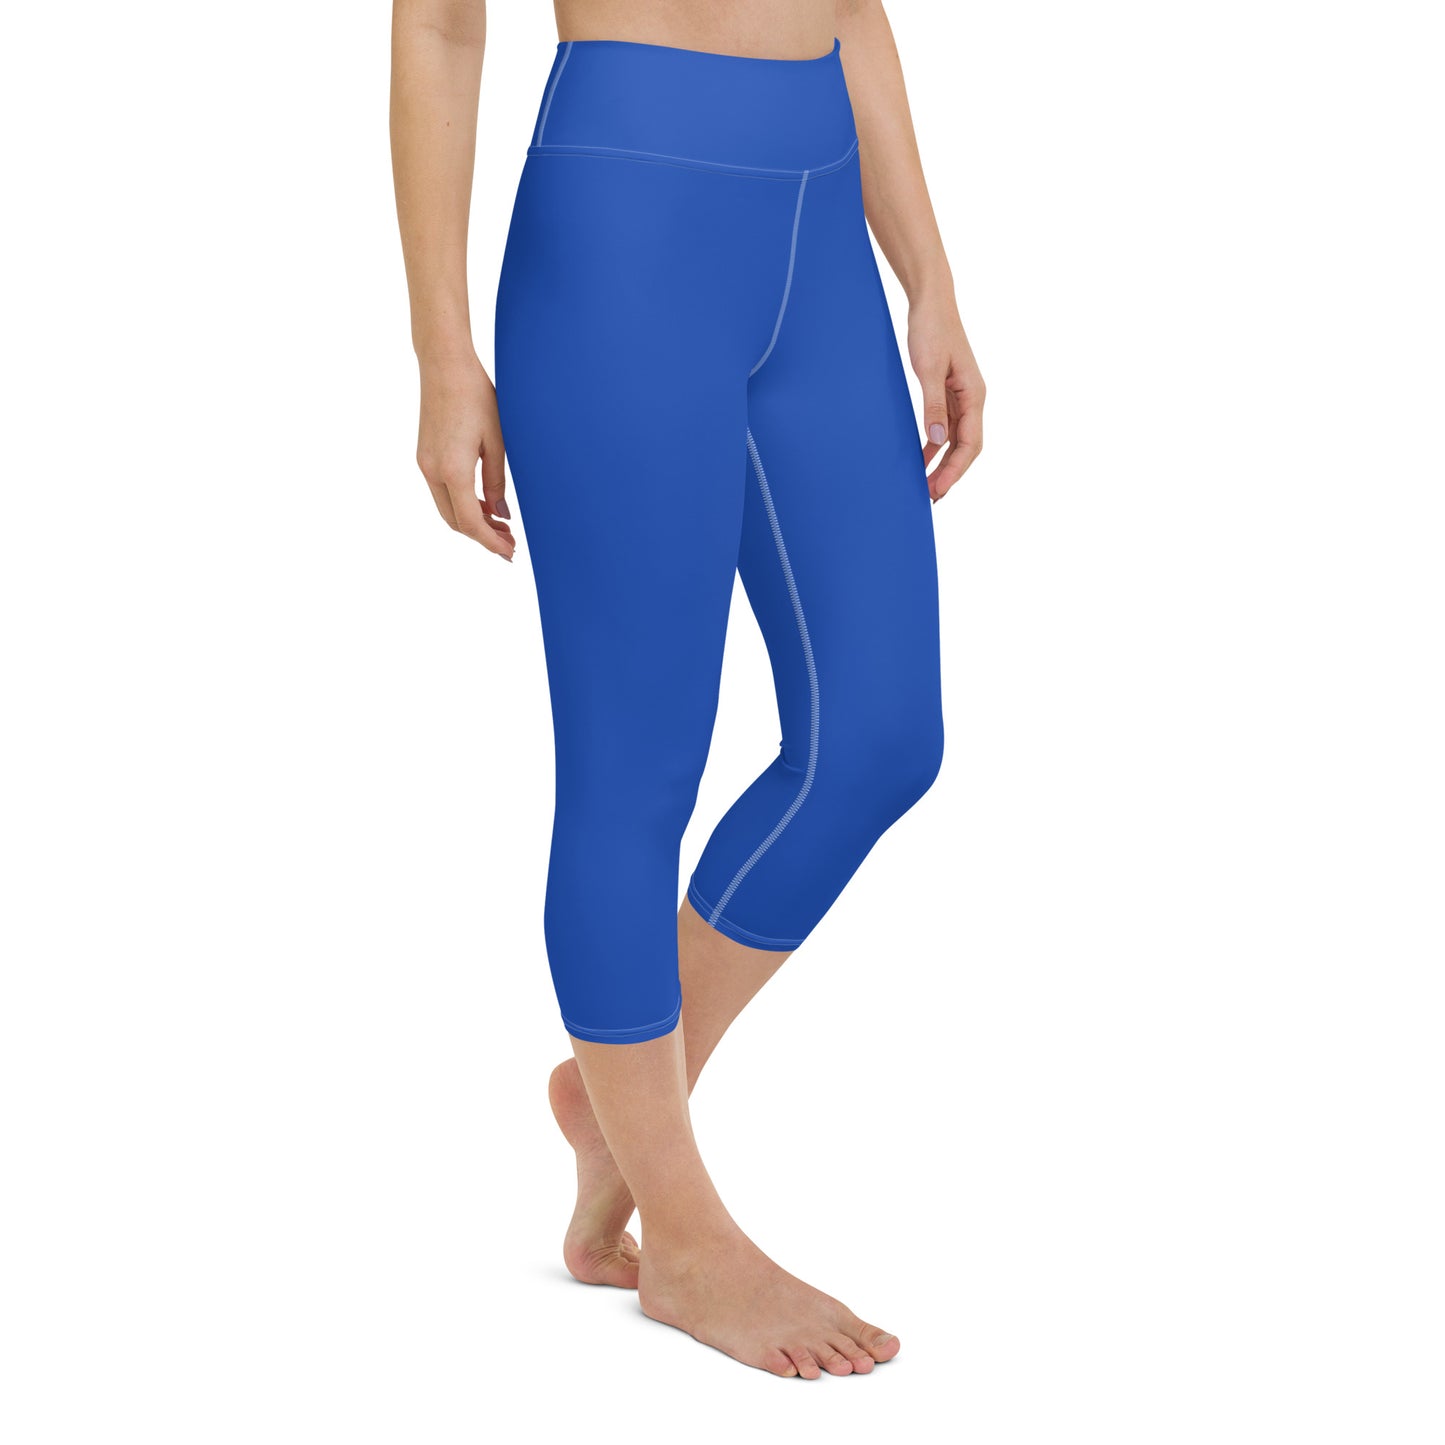 Borno Solid Blue Capri High Waist Yoga Leggings / Pants with Inside Pocket